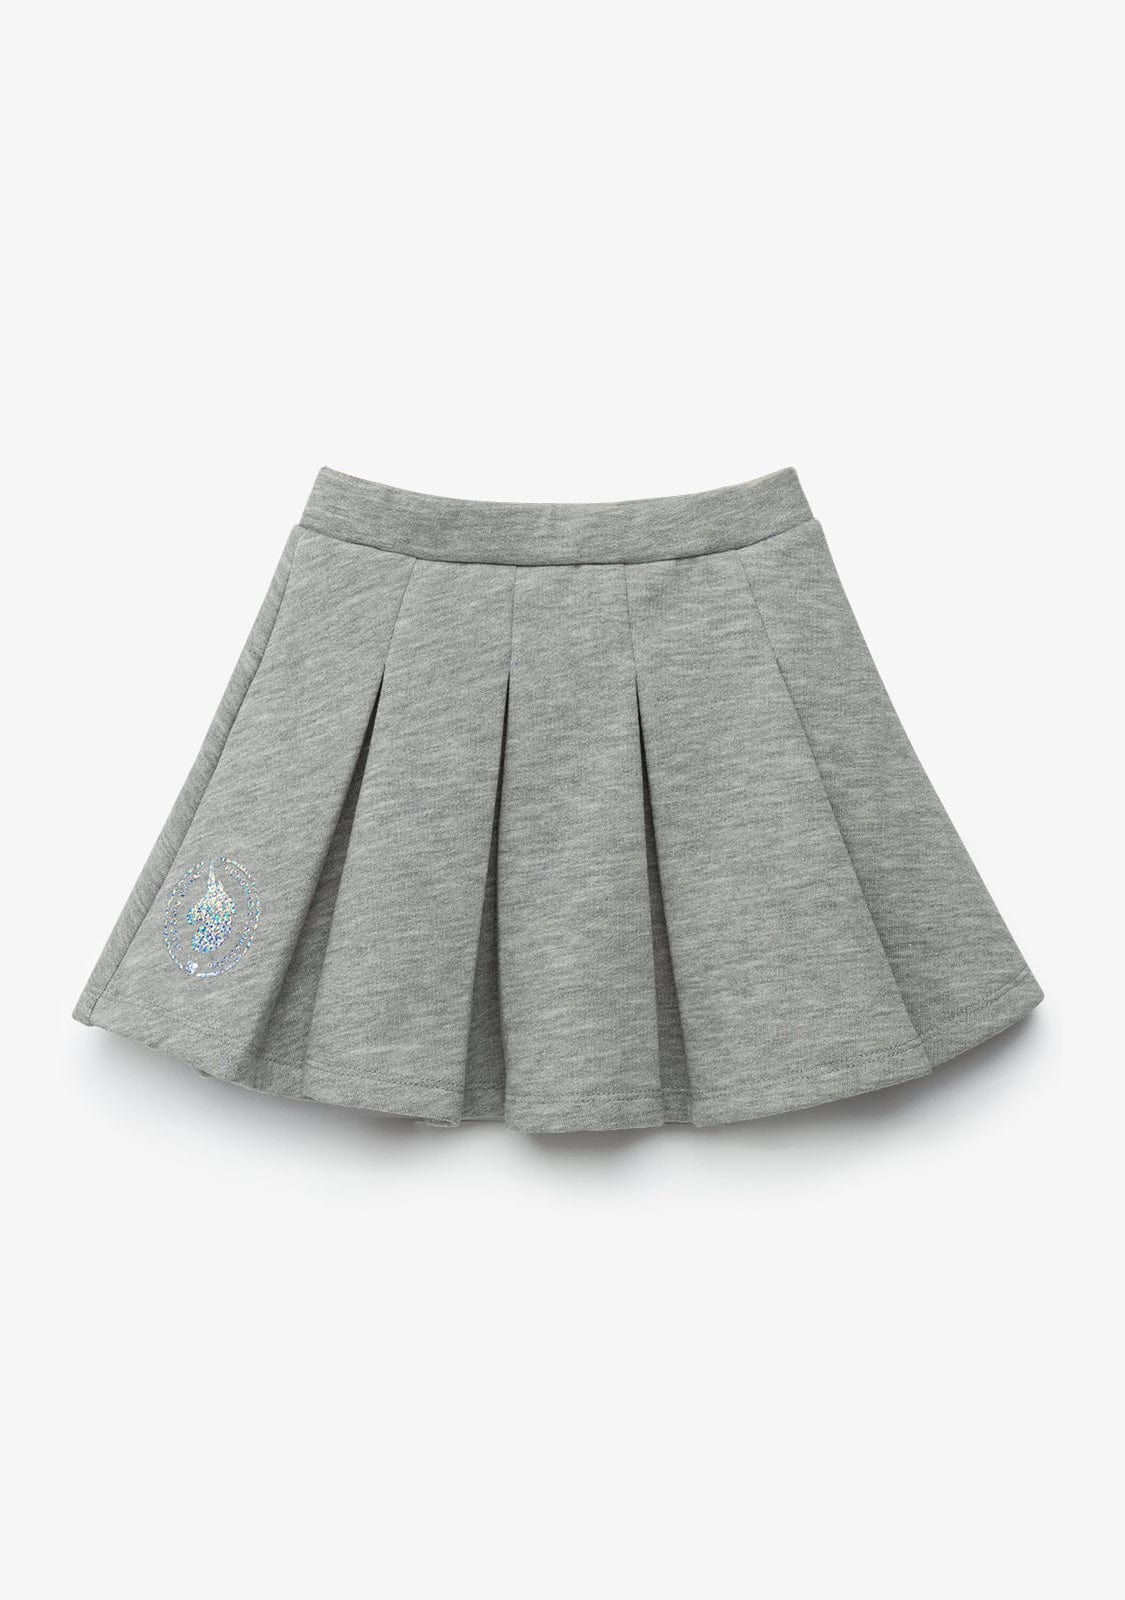 CONGUITOS TEXTIL Clothing Girl's Grey Unicorn Skirt